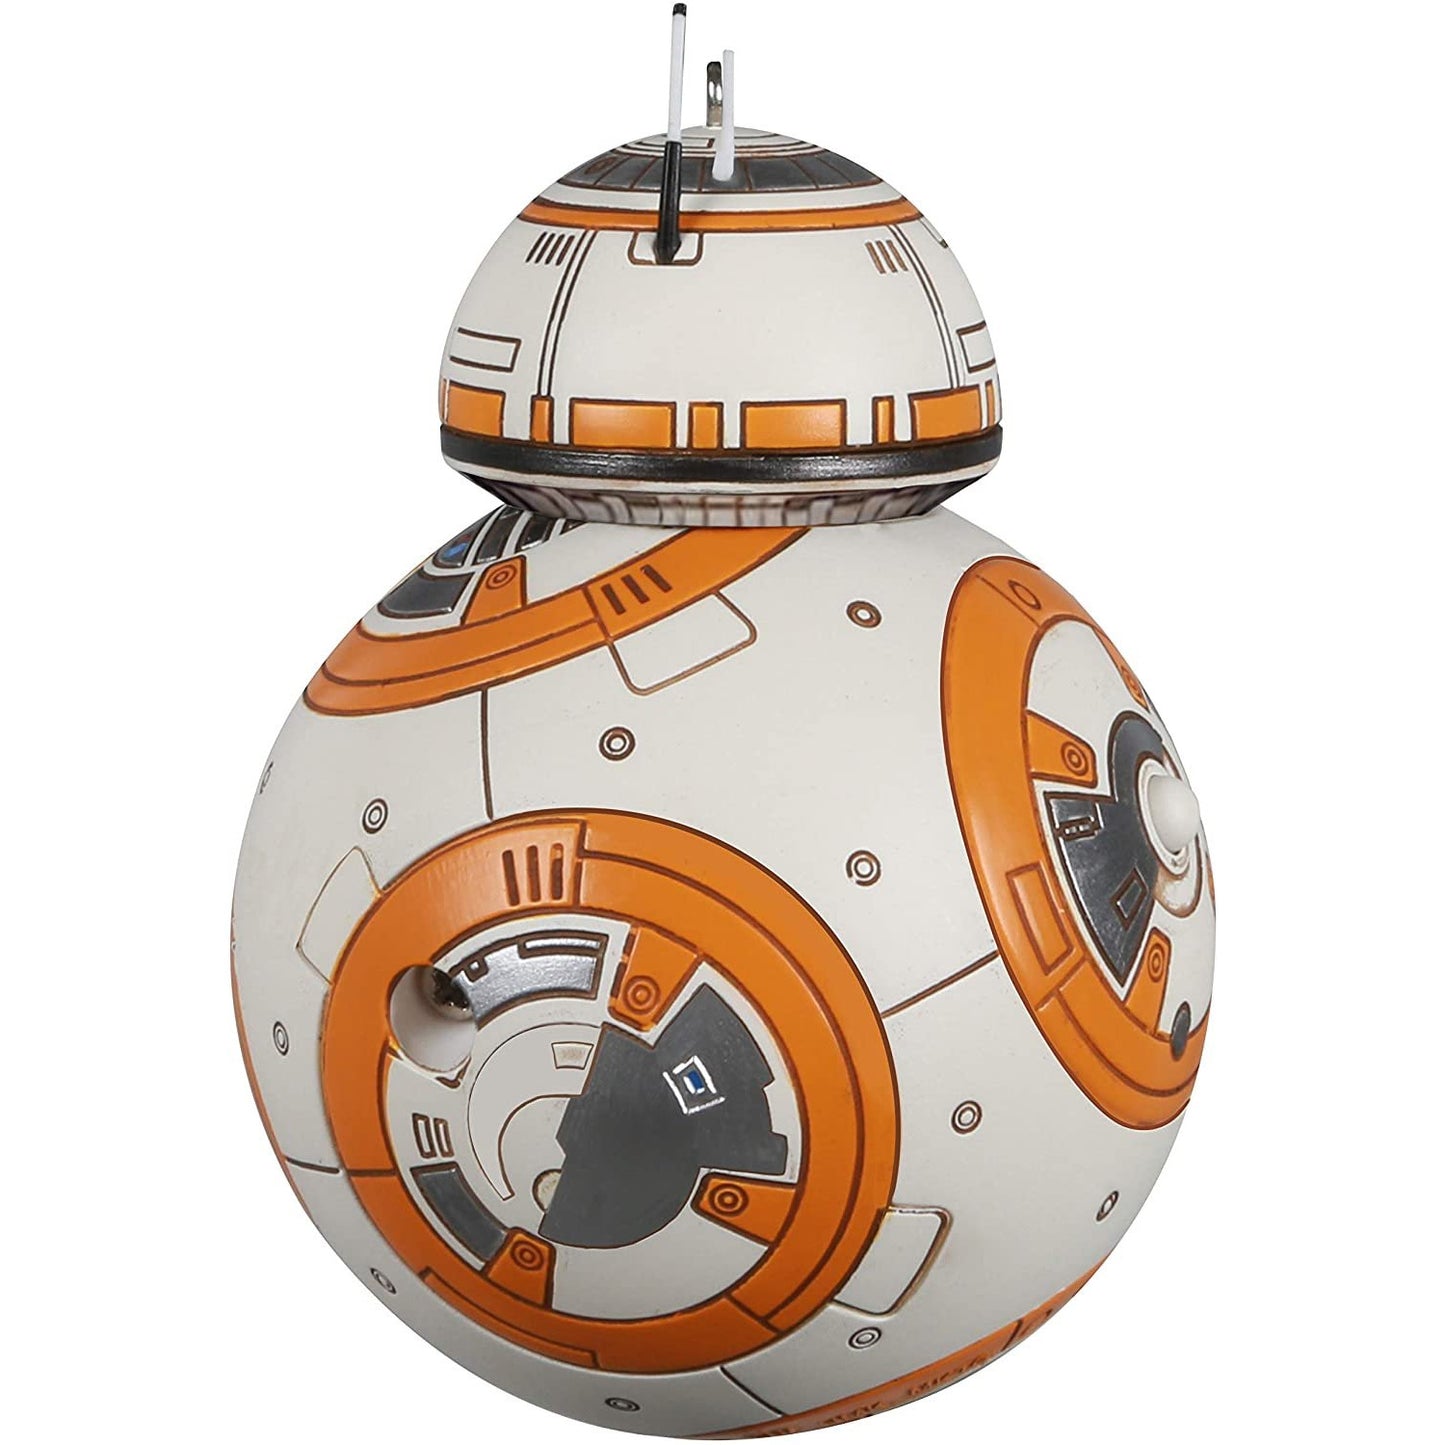 Hallmark Keepsake Christmas Ornament 2020, Star Wars: The Force Awakens BB-8 With Sound